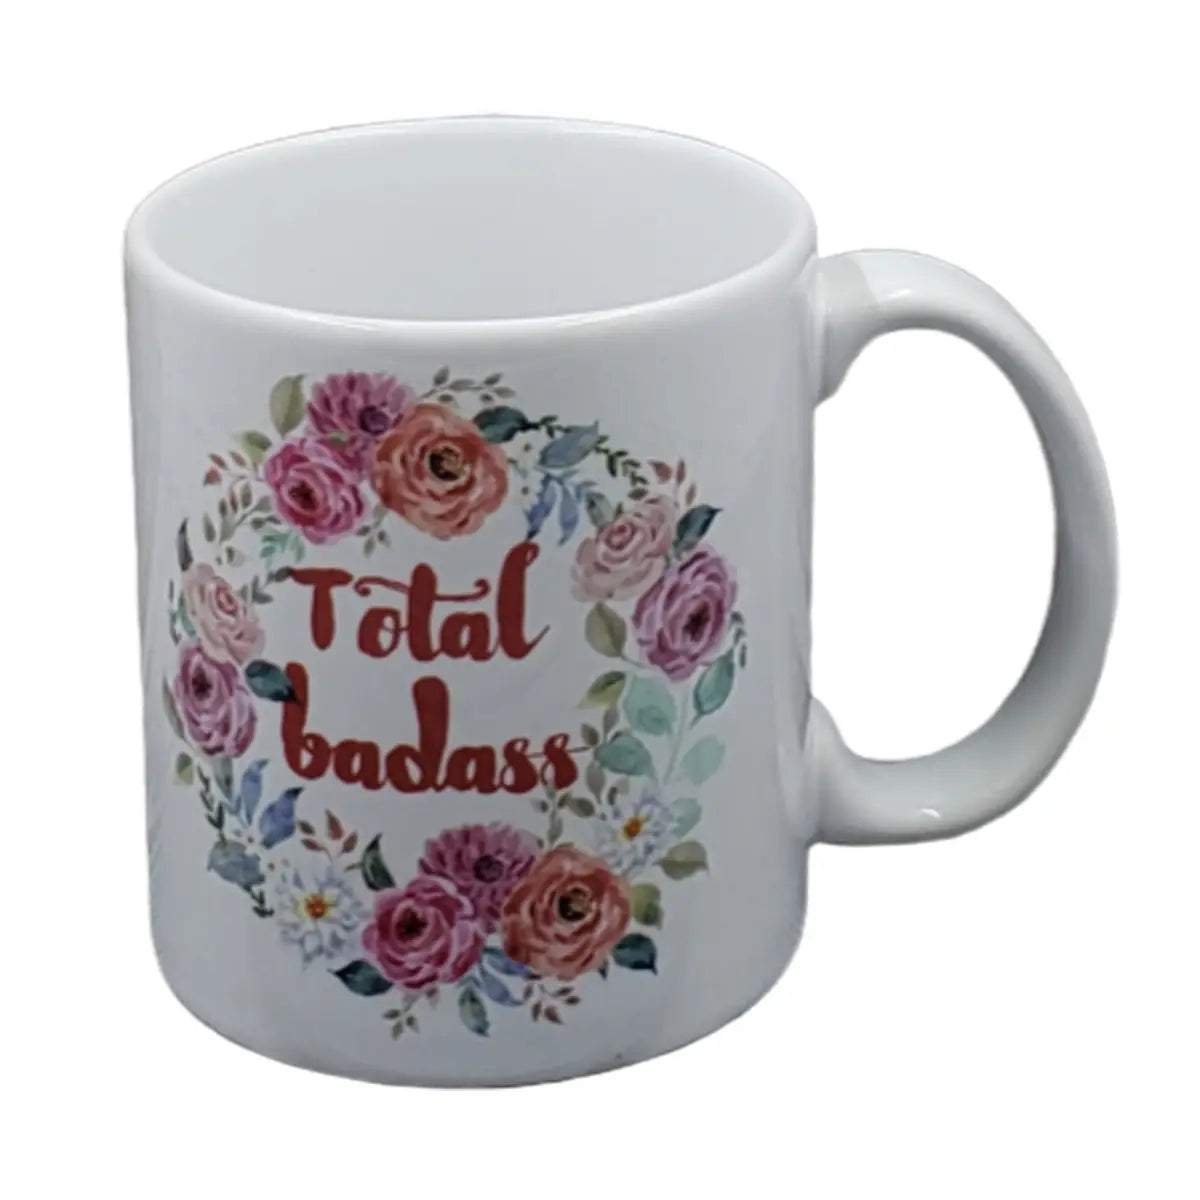 Total Badass Coffee Mug